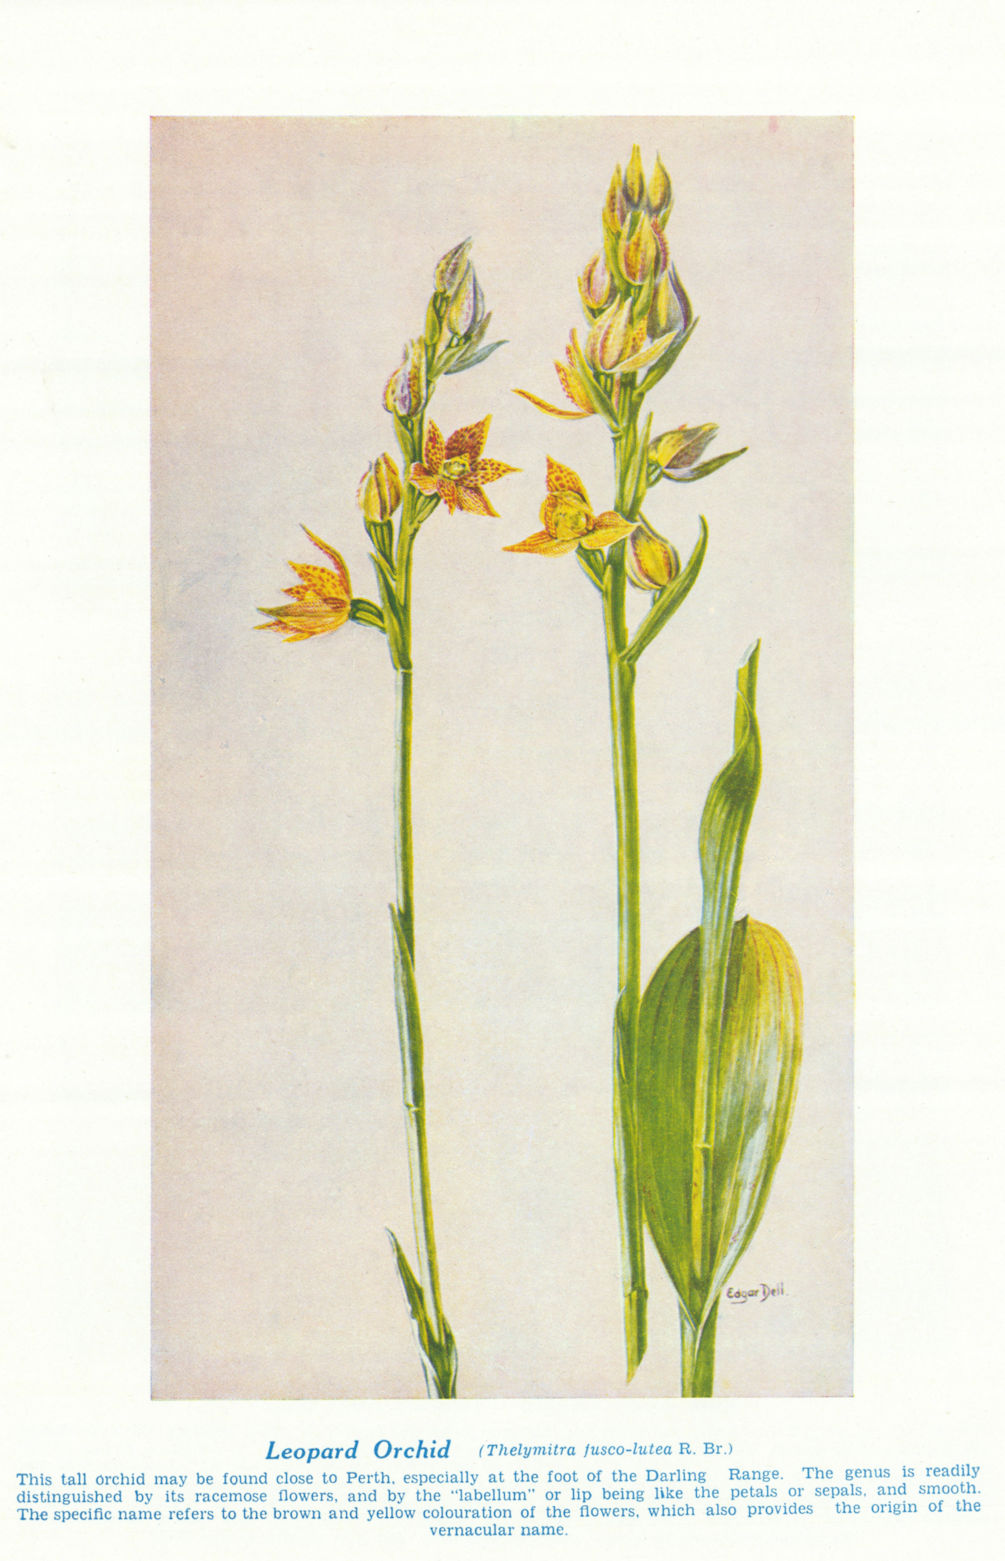 Leopard Orchid (Thelymitra fusco-lutea). West Australian Wild Flowers 1950